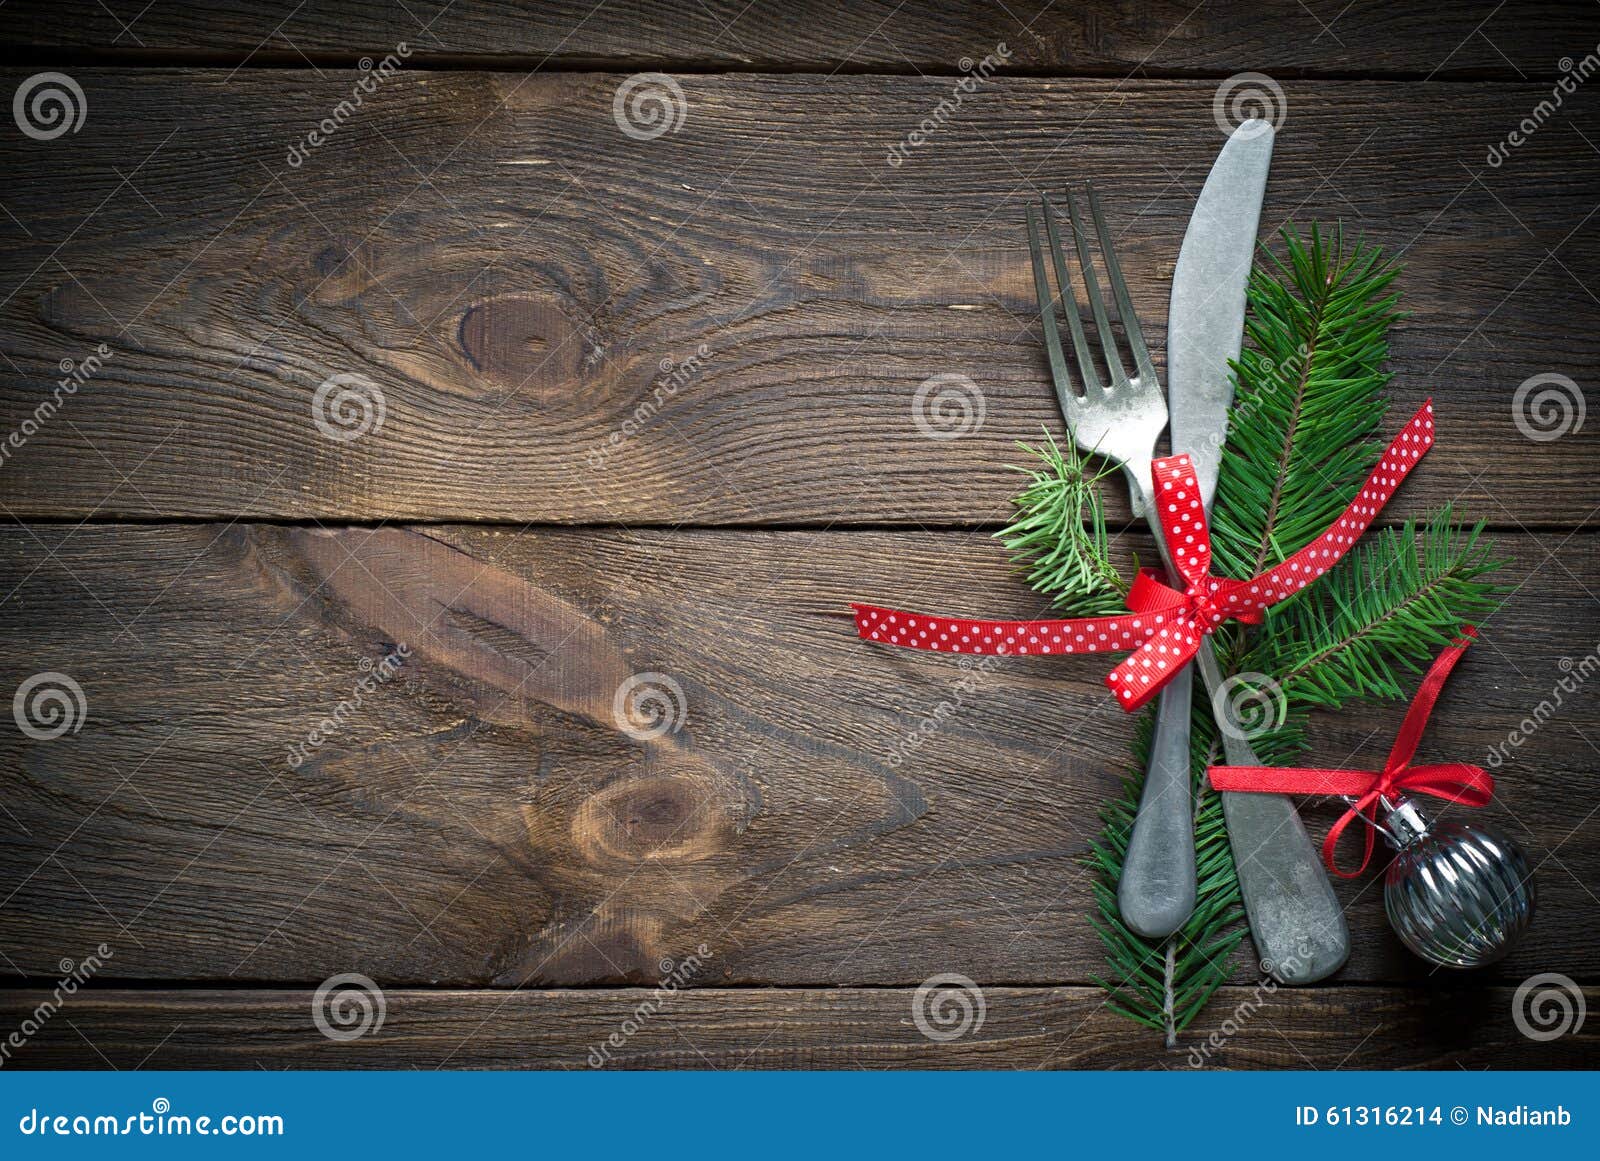 Christmas silverware stock photo. Image of card, fork - 61316214